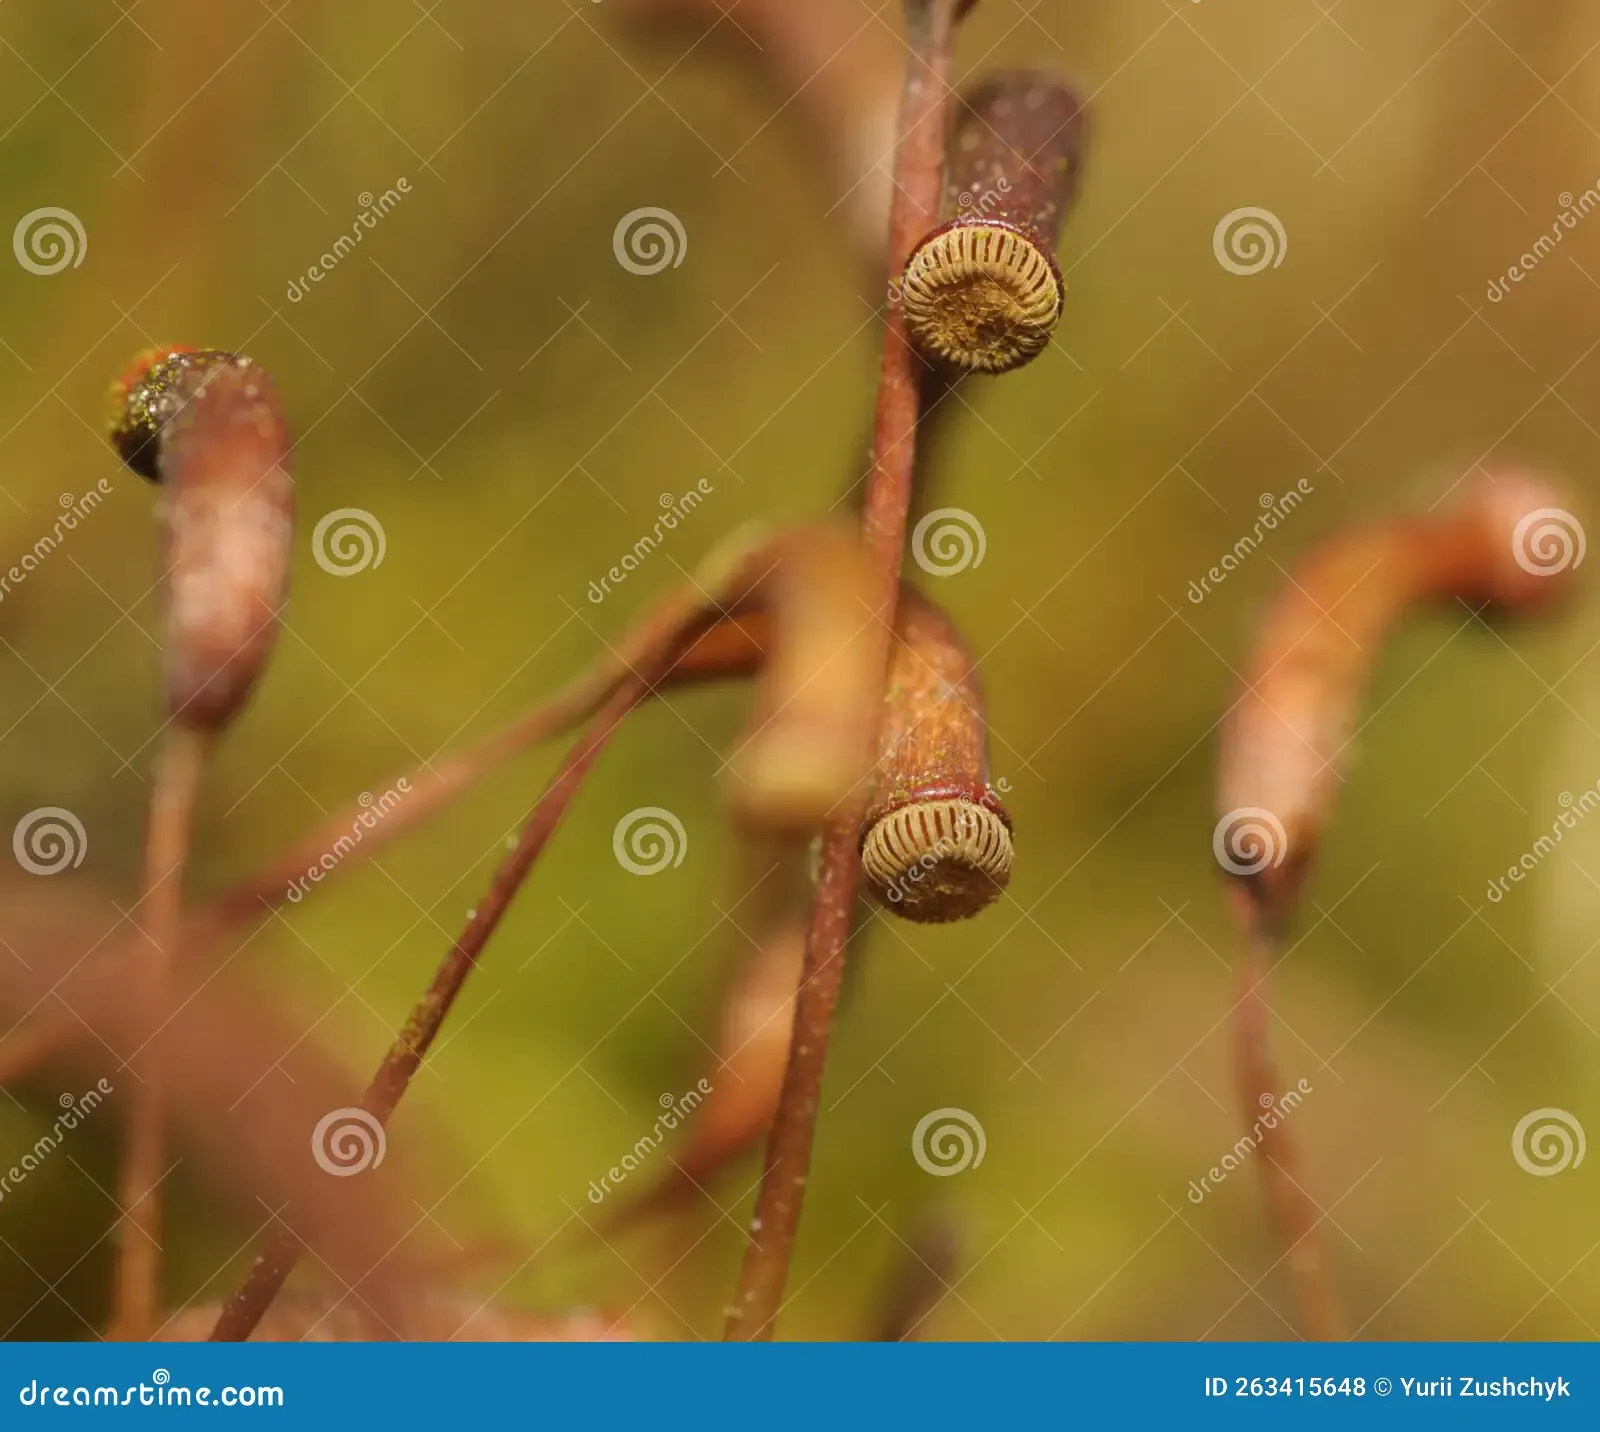 moss-aulacomnium-androgynum-seeds-growing-ground-263415648.jpg